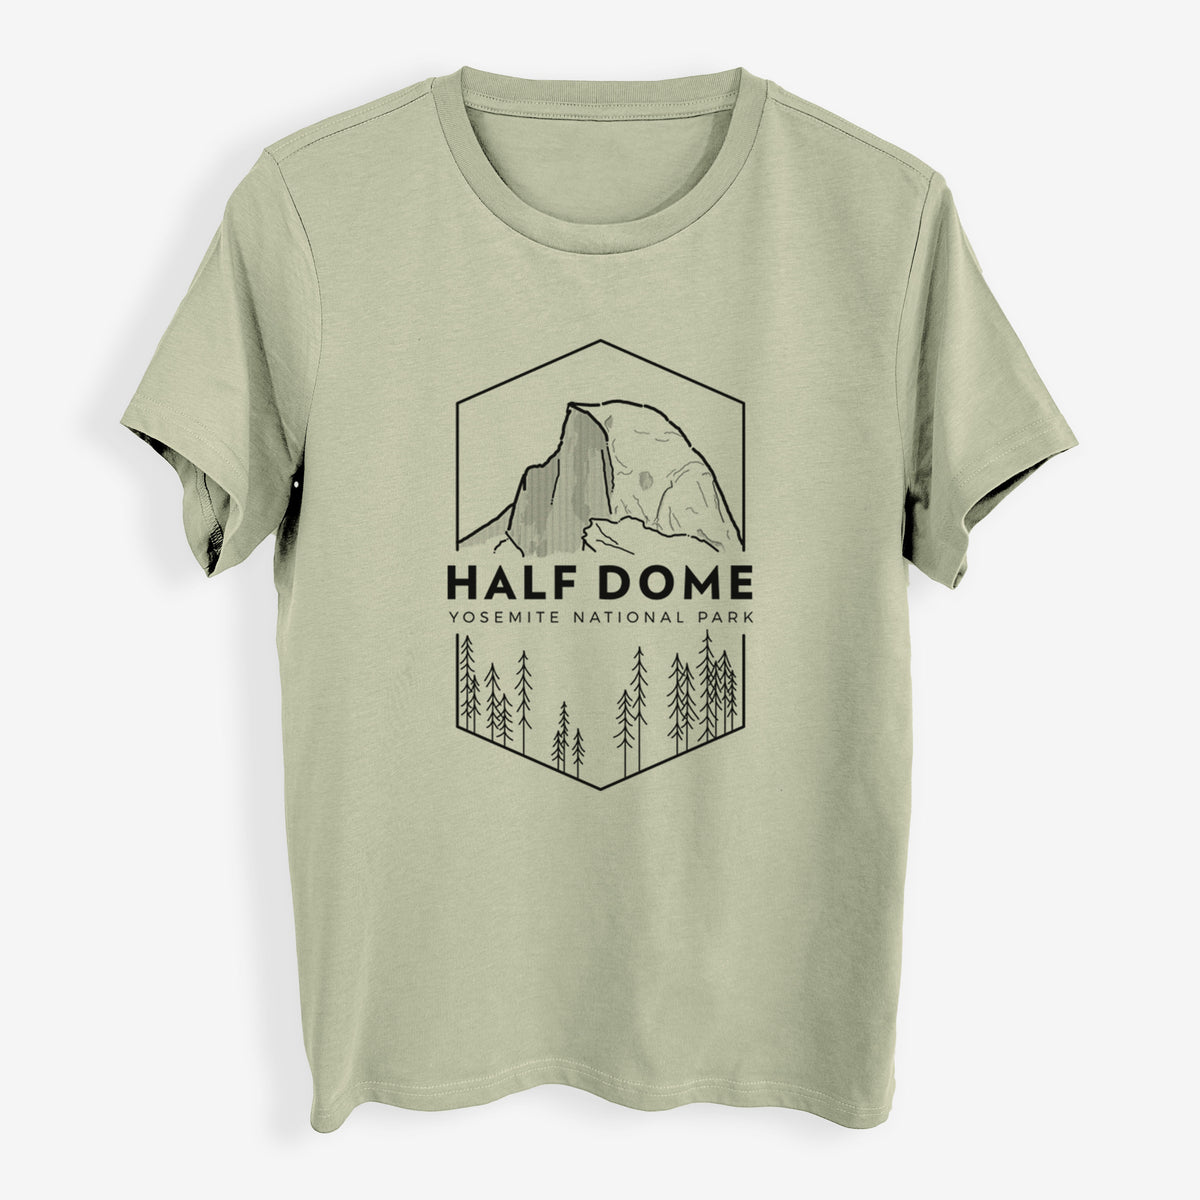 Half Dome - Yosemite National Park - Womens Everyday Maple Tee